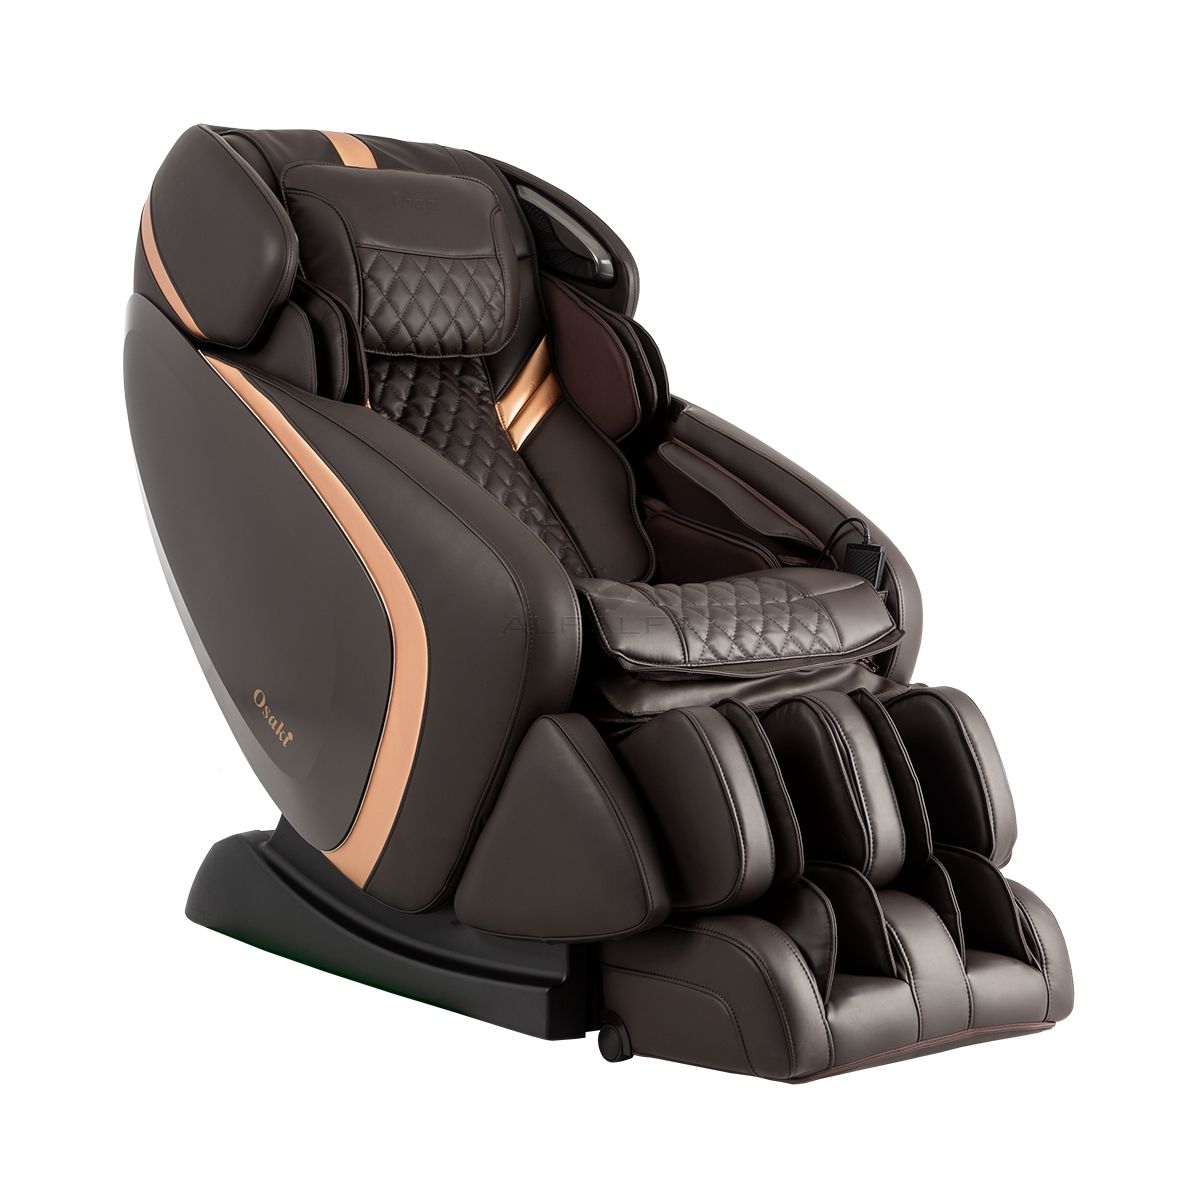 Osaki OS-Pro Admiral Massage Chair